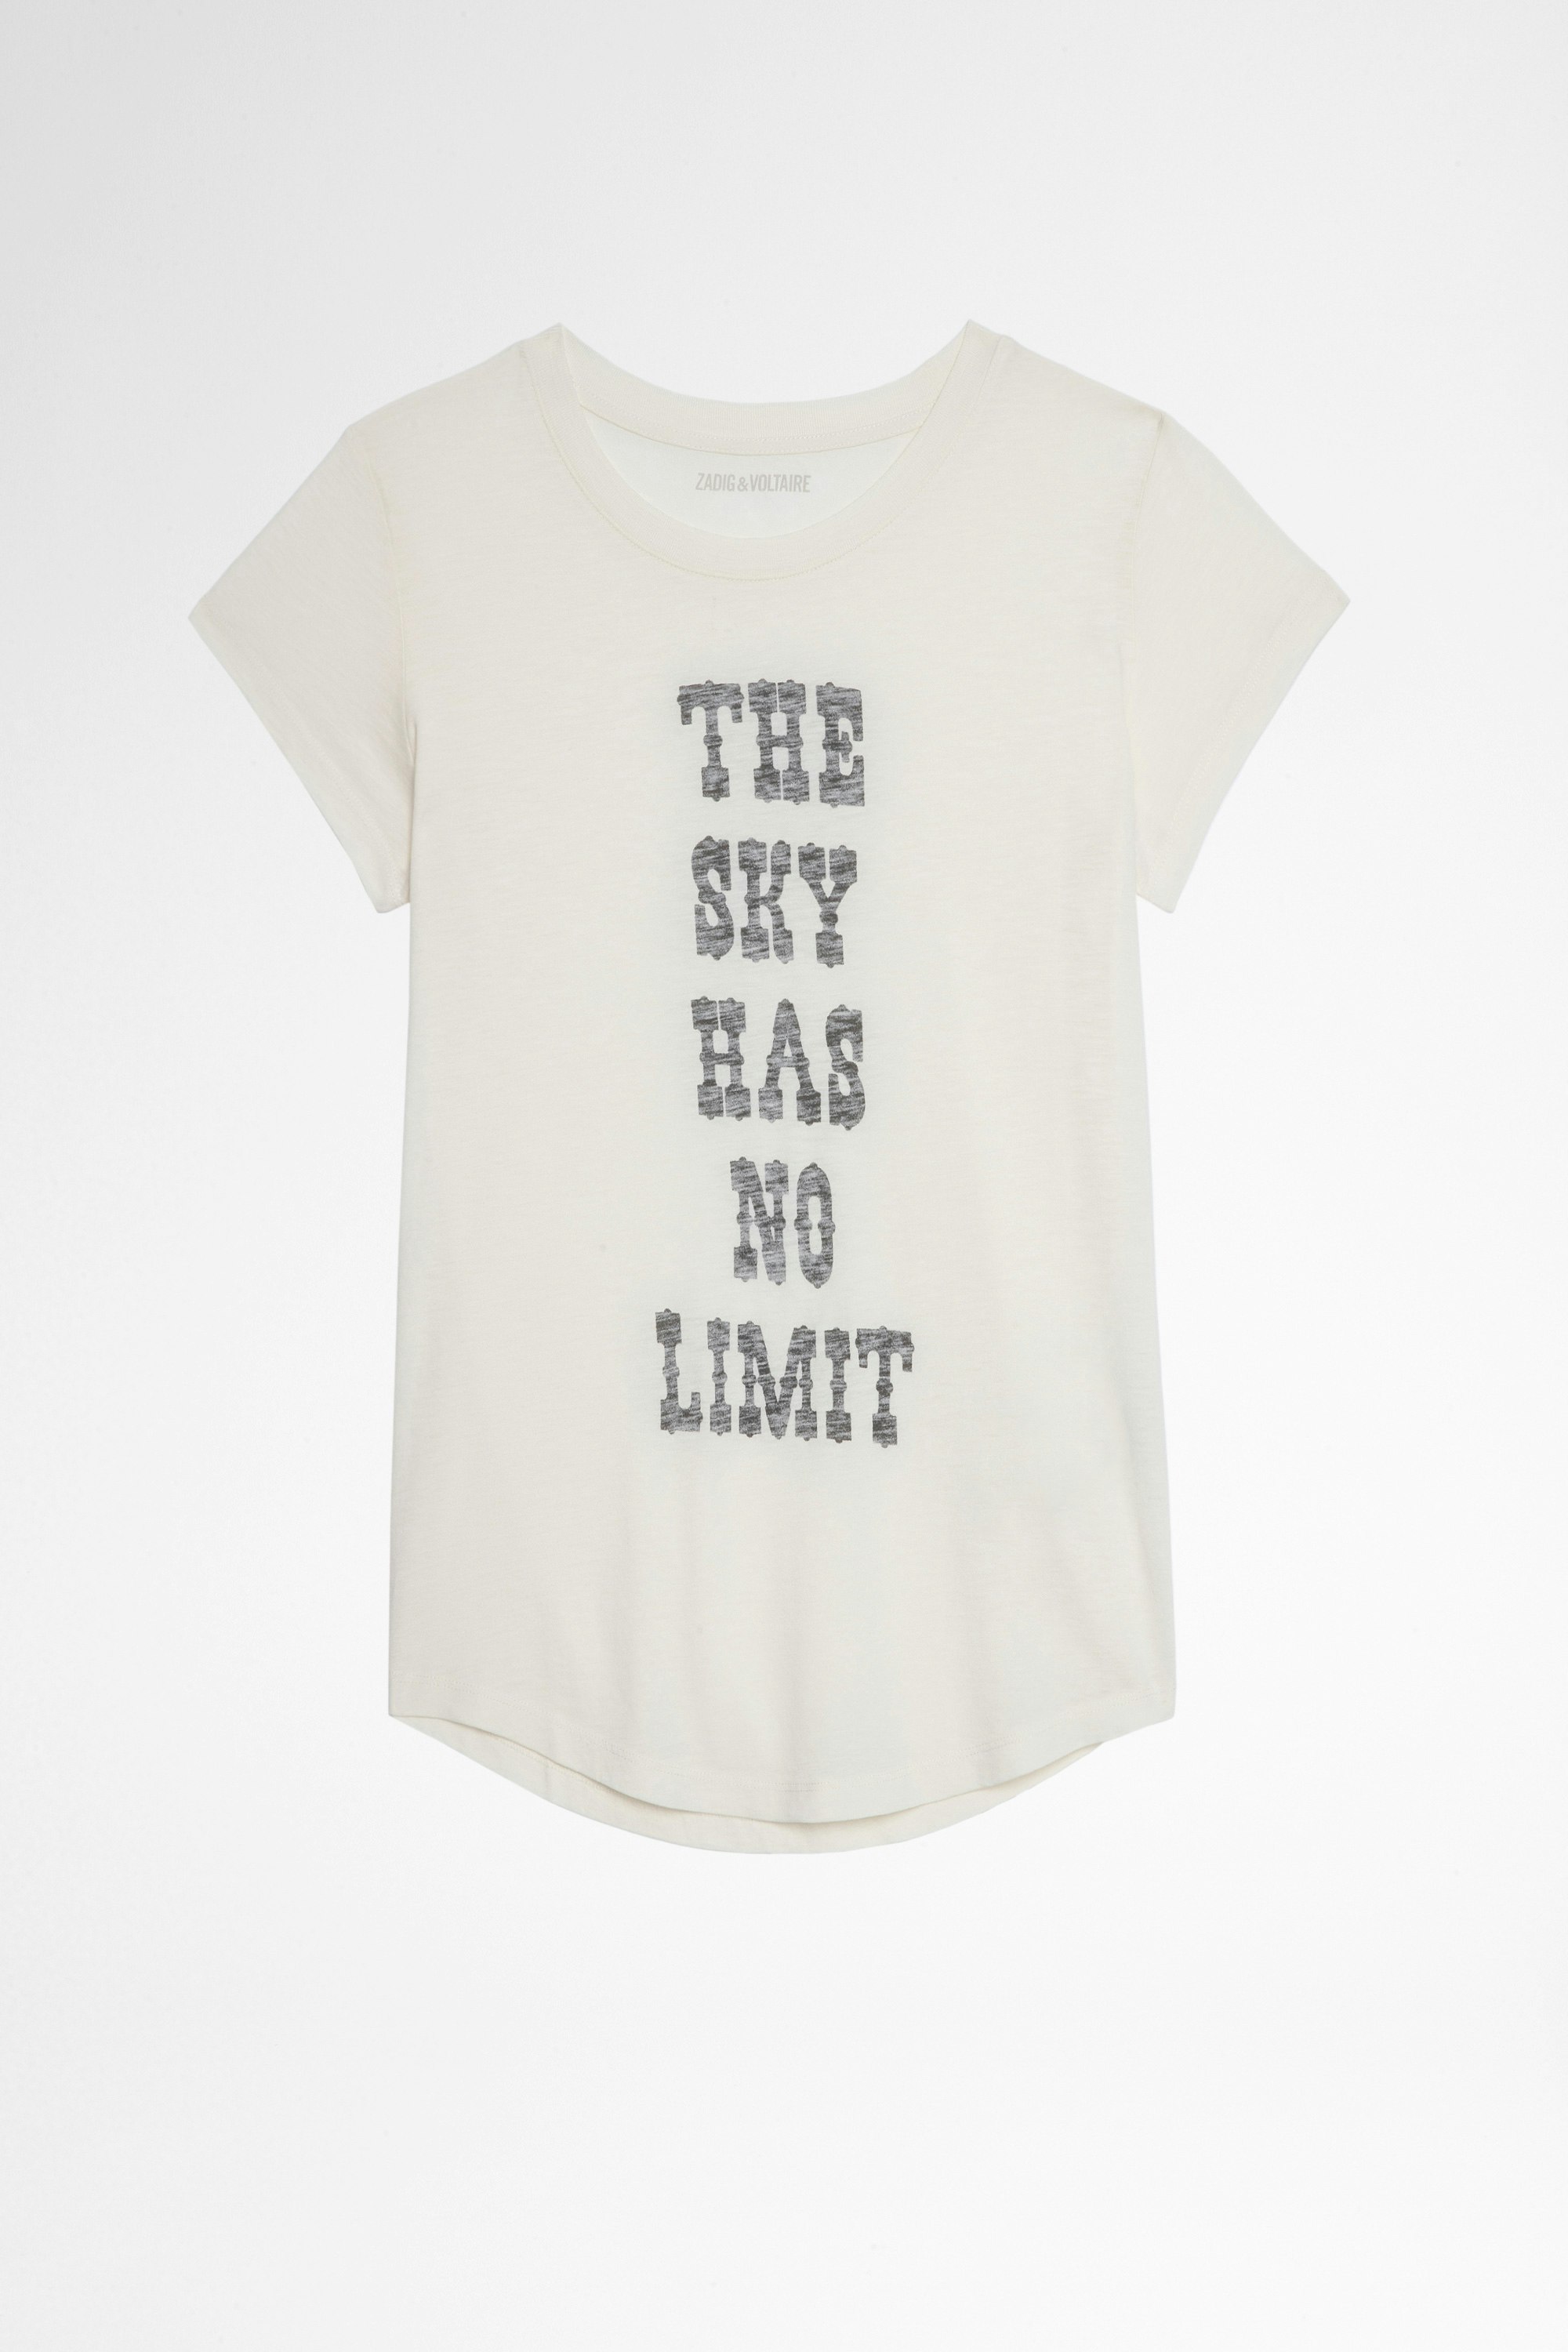 Camiseta Woop Camiseta blanca The Sky has no limit